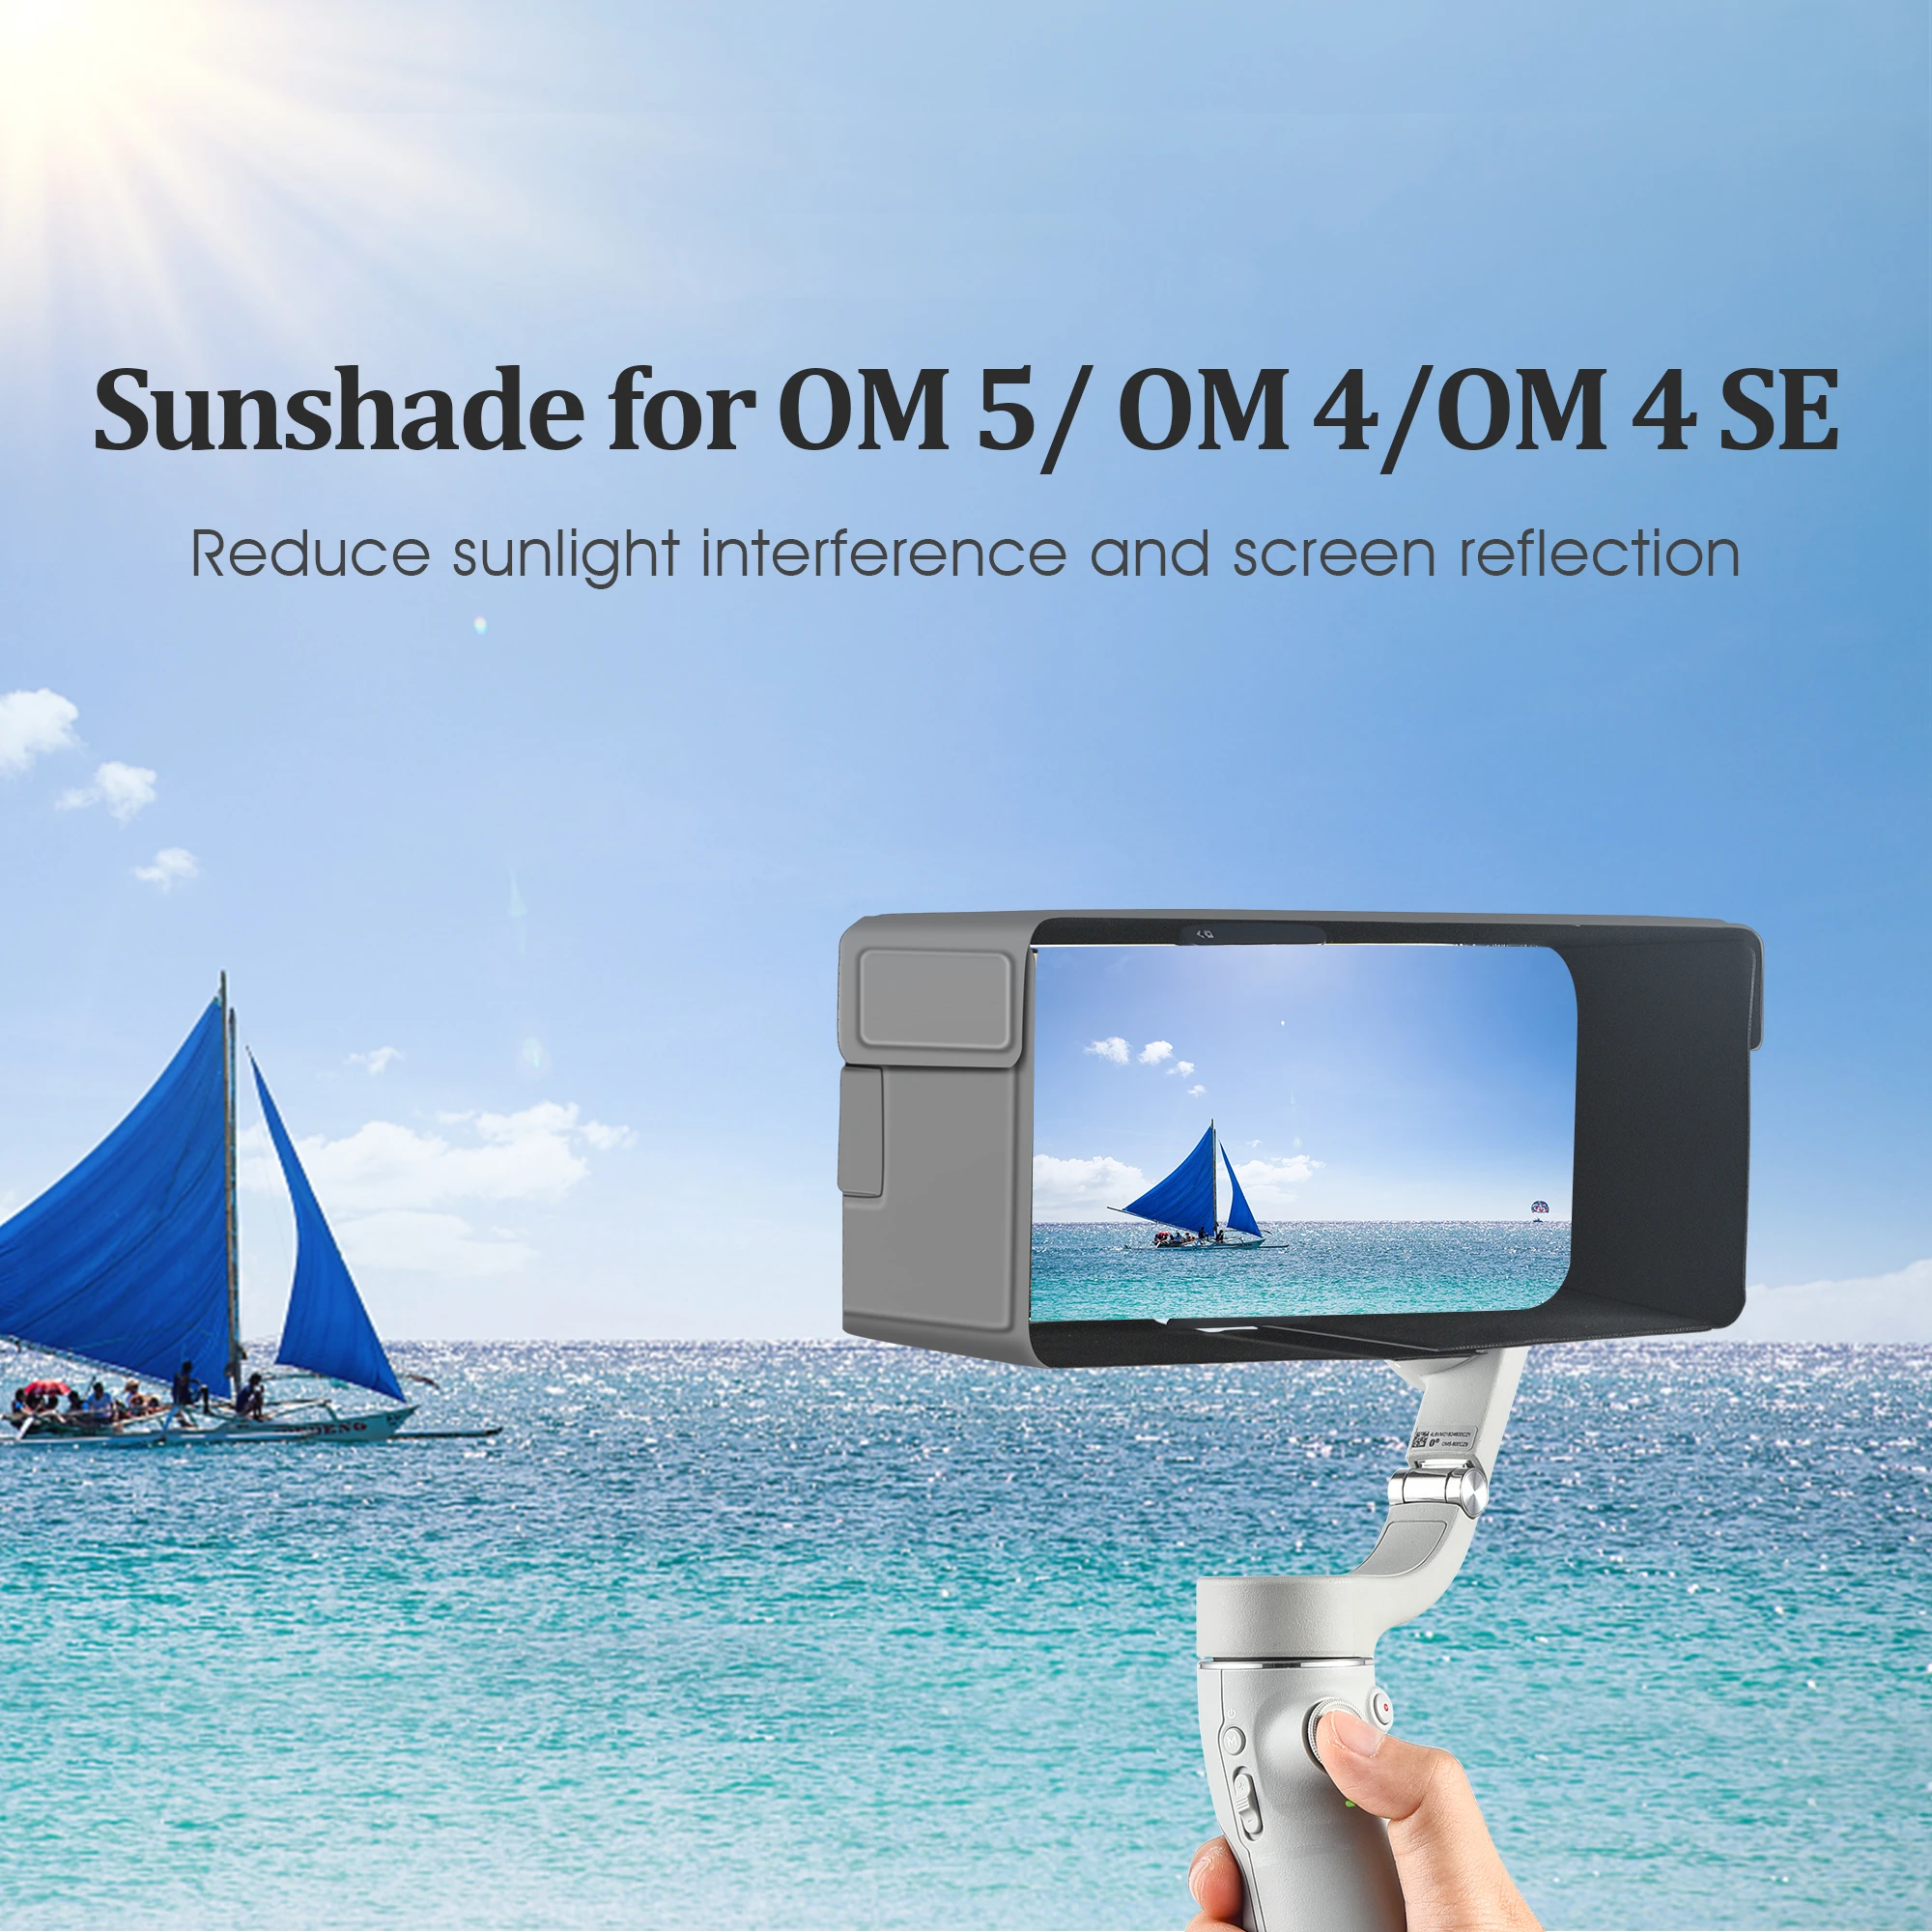 

DJI OM5/OM4/SE Handheld Gimbal Mobile Phone Sunshade PU Magnetic Sun Hood Folding Sunhood for DJI Osmo Mobile 5 4 SE Accessories